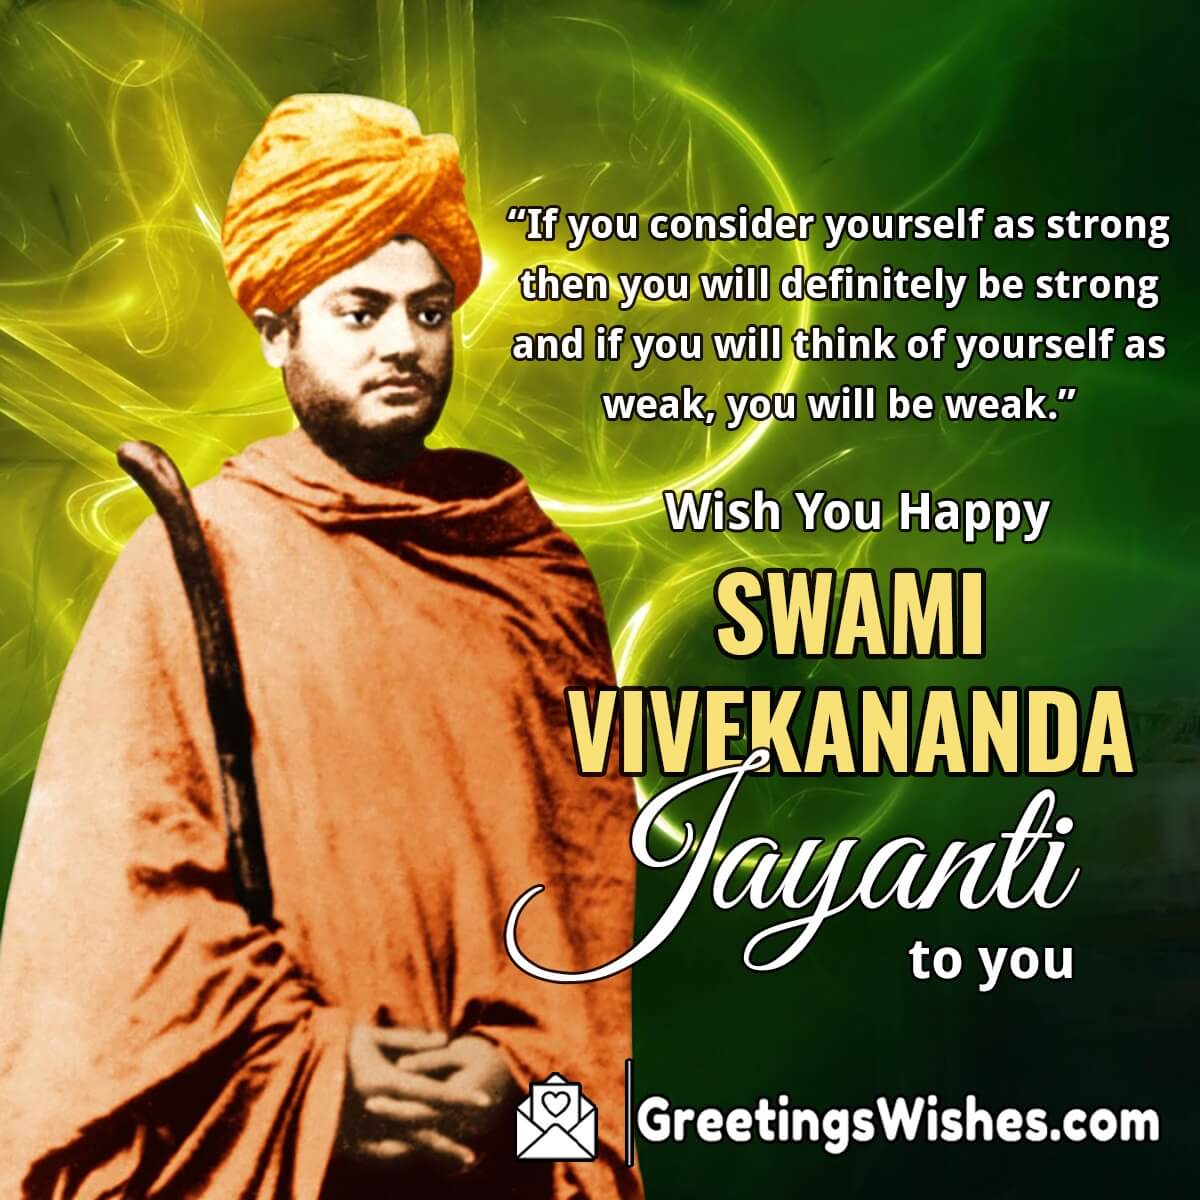 Swami Vivekananda Jayanti Messages